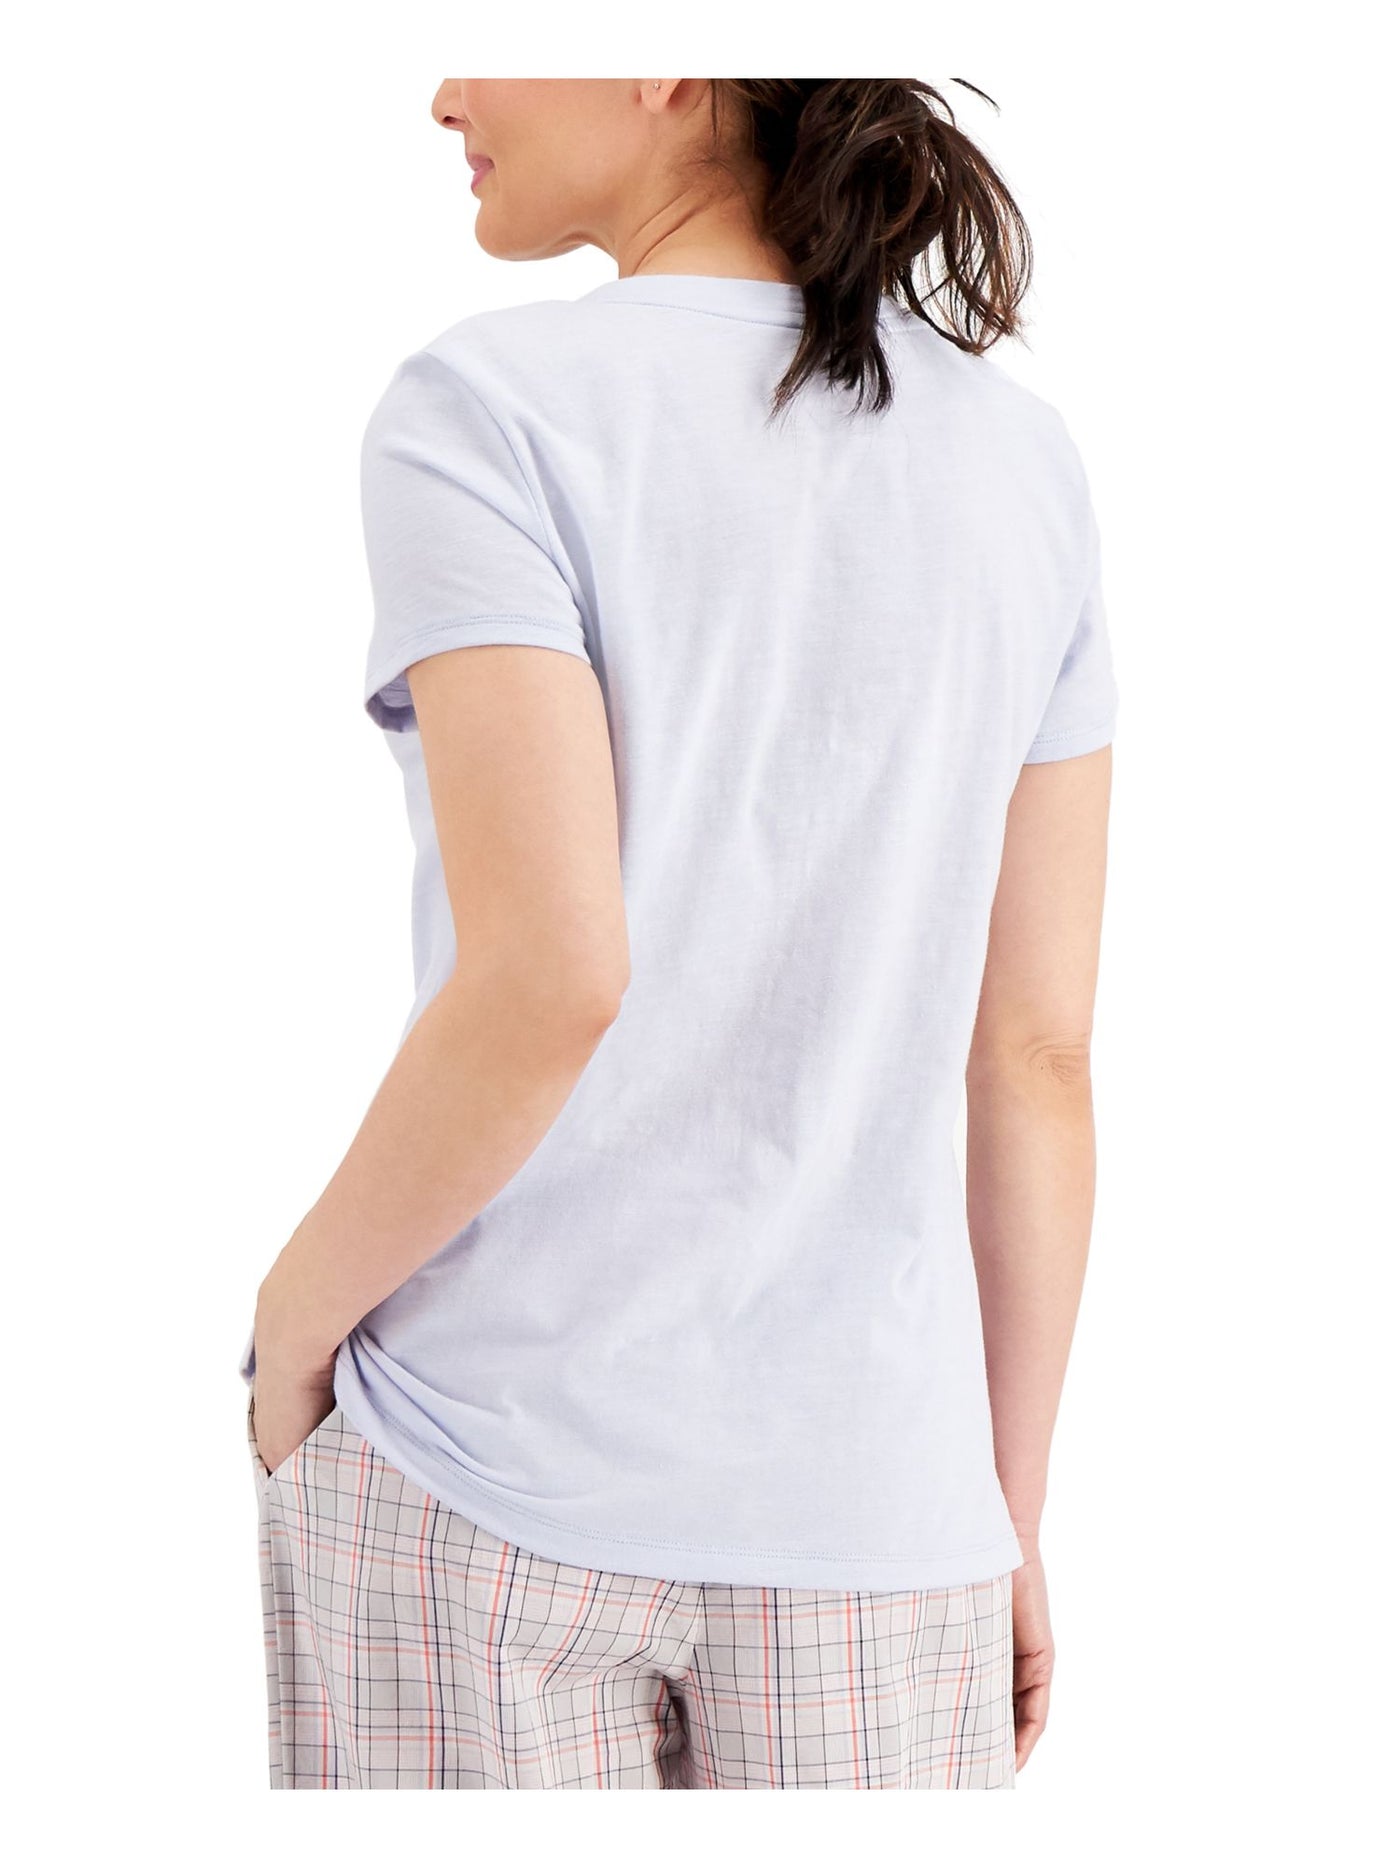 CHARTER CLUB Intimates Light Blue Cotton Blend V-Neck Sleepwear Sleep Shirt Pajama Top S